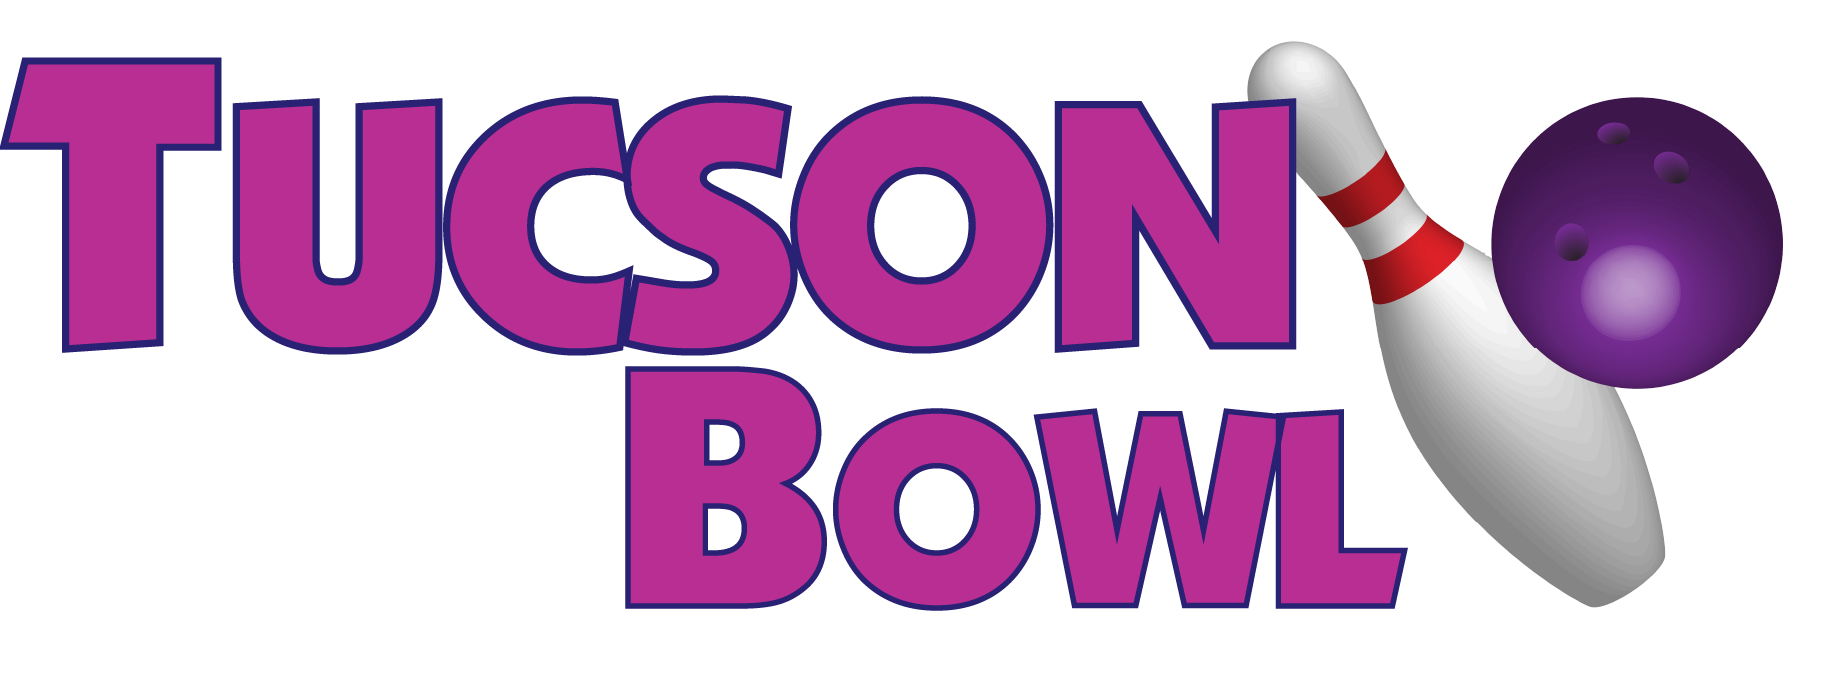 Tucson Bowl